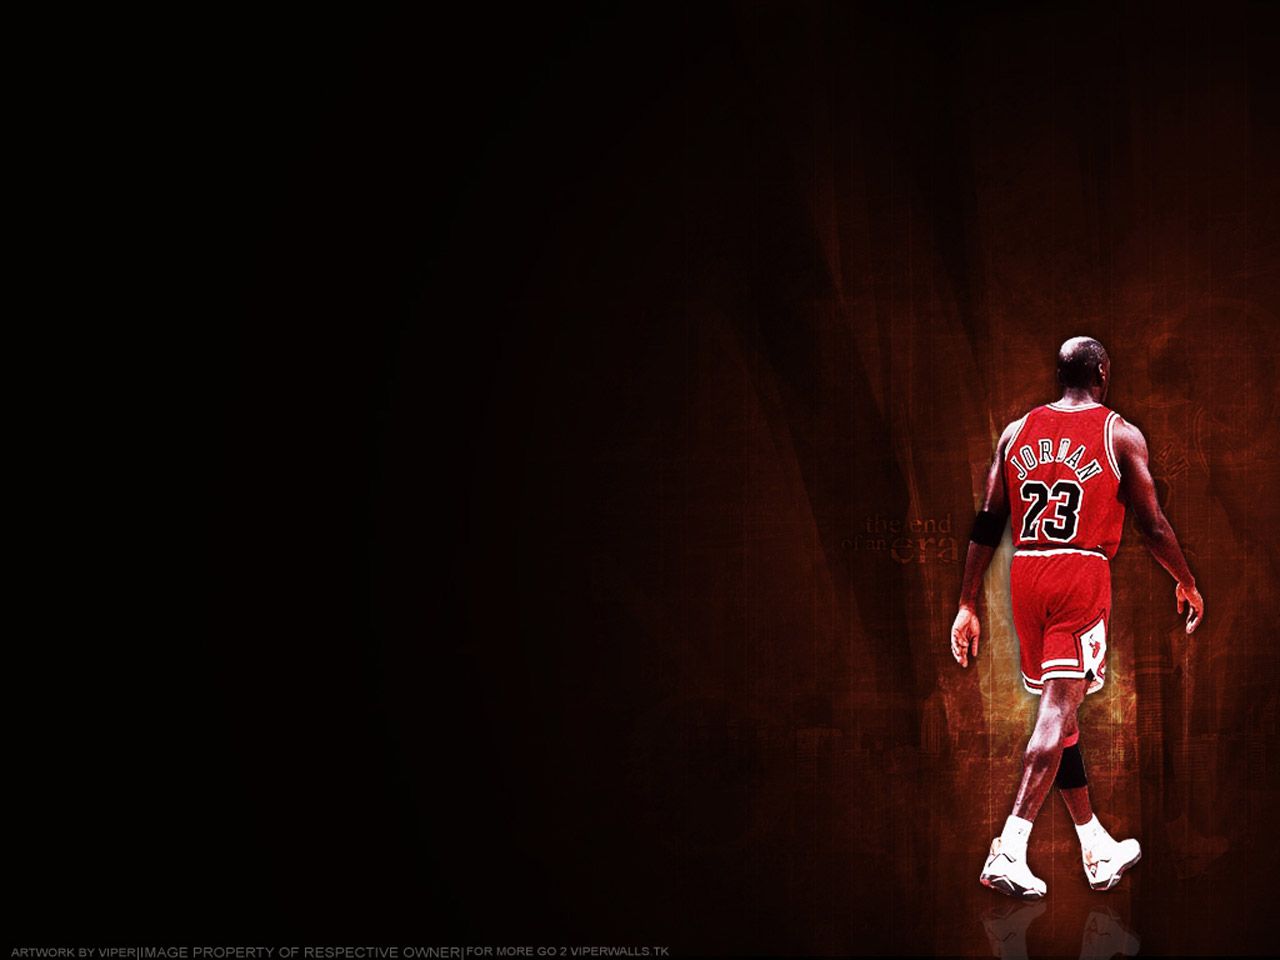 Jordan Background. Michael Jordan HD